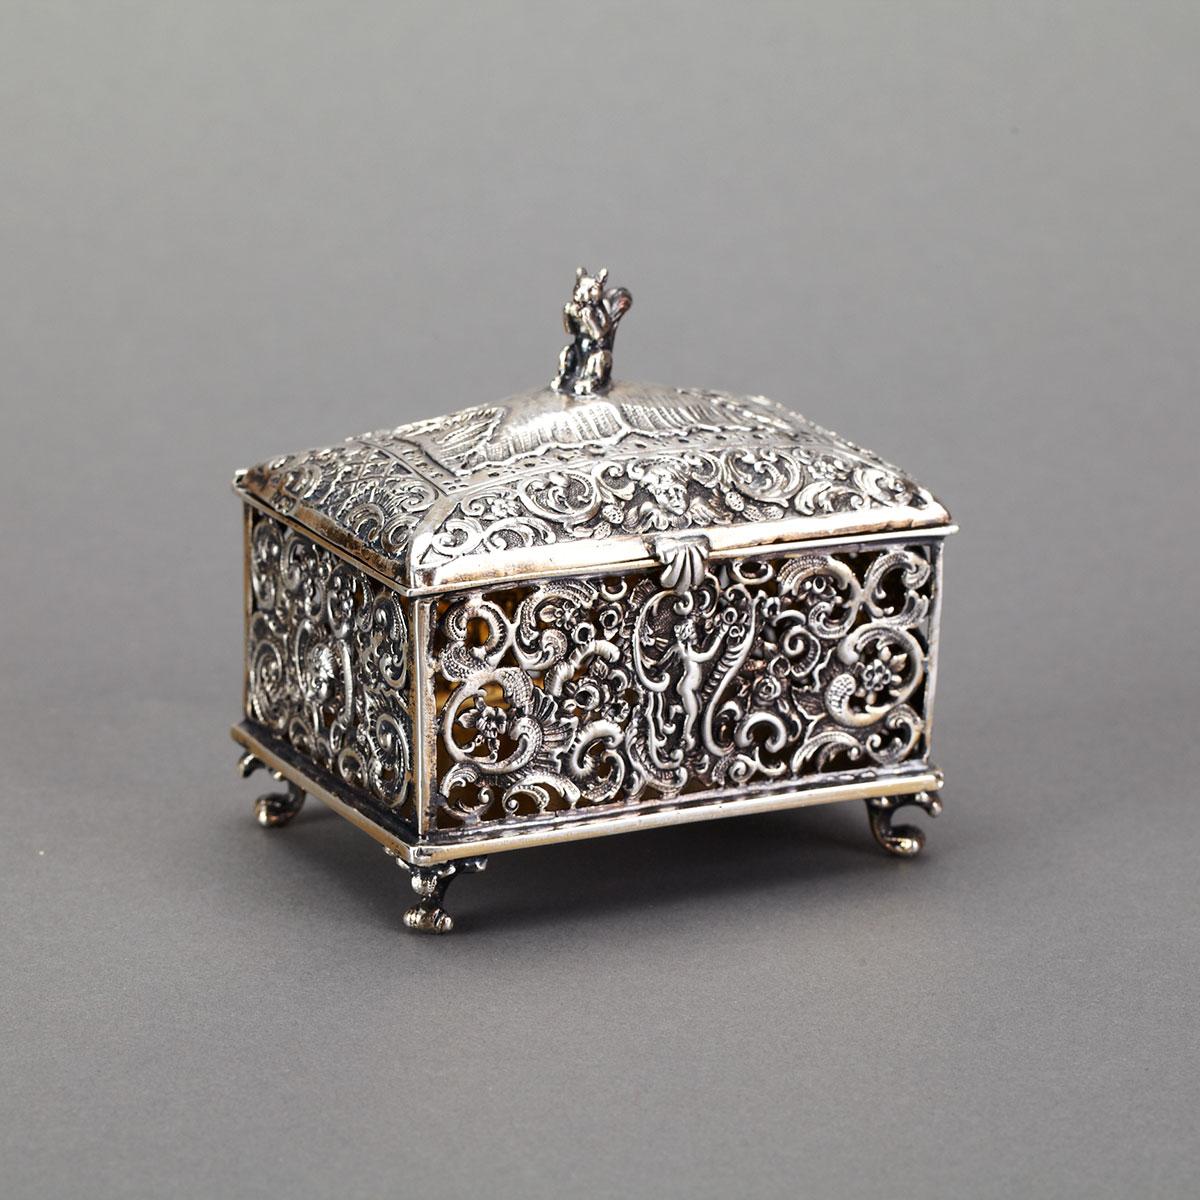 German Silver Potpourri Box, probably Hanau, c.1888